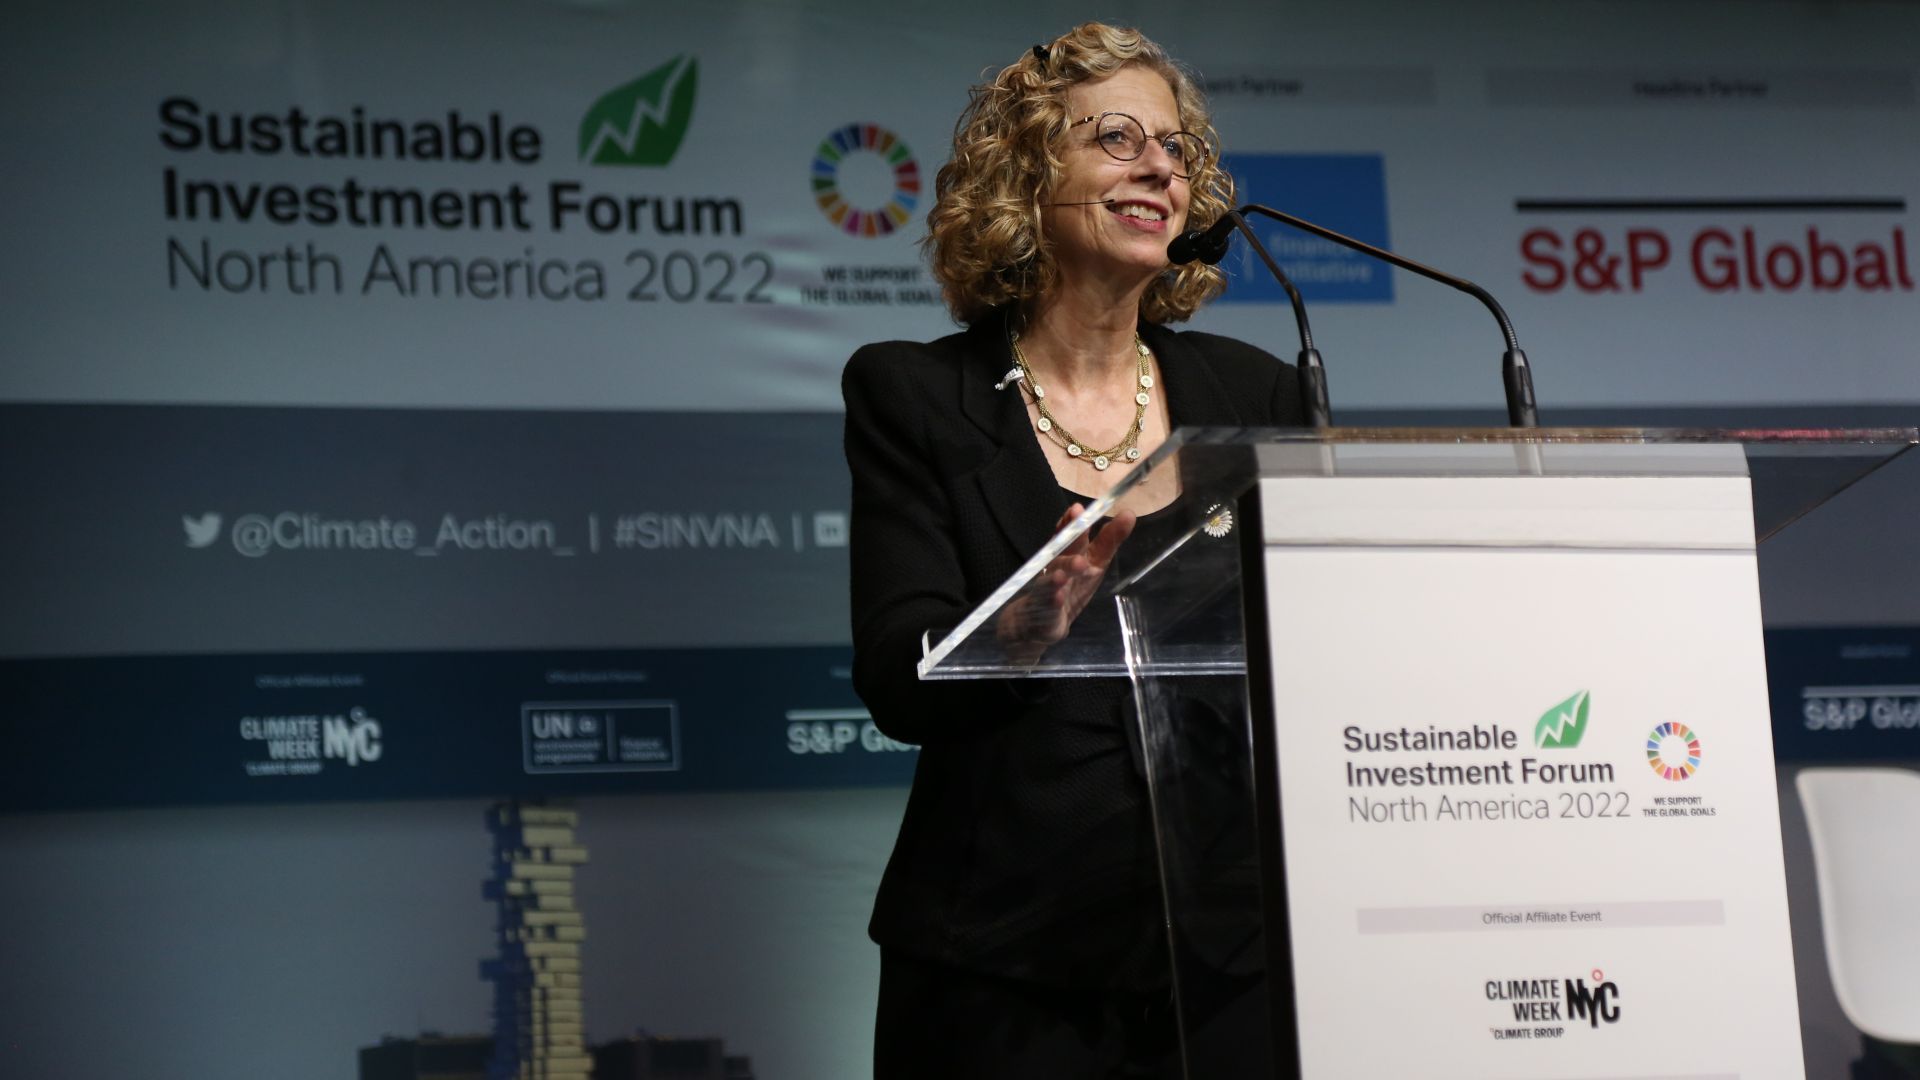 Sustainable Investment Forum North America 2023